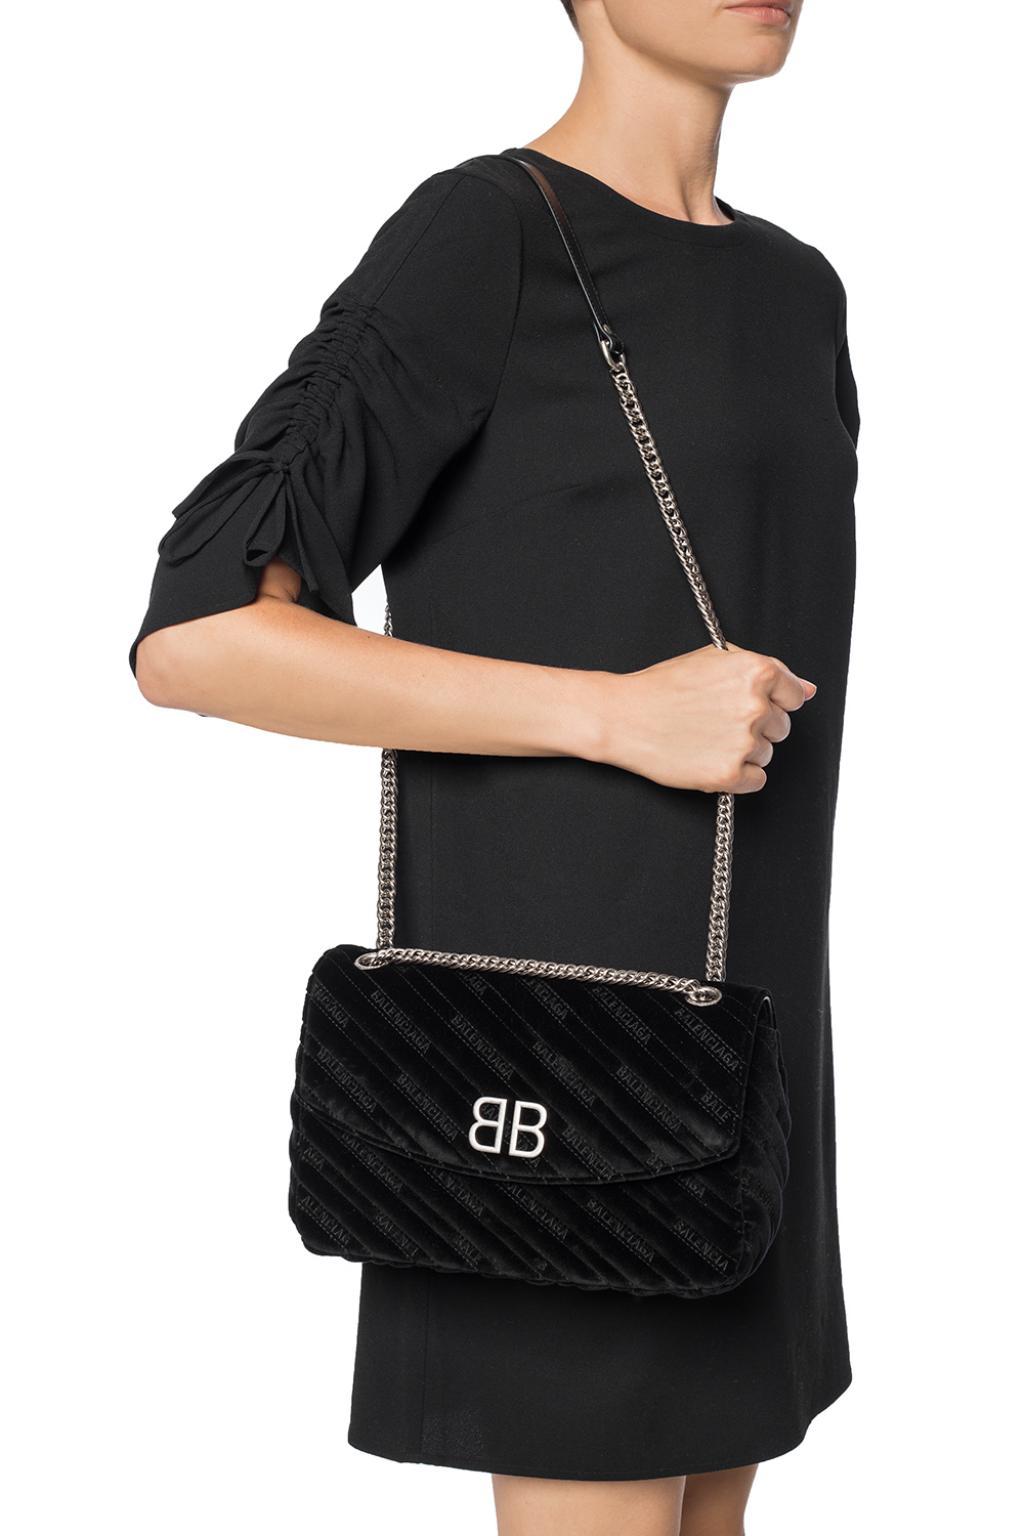 Balenciaga BB Lock Small Black Leather Logo Quilted Handbag Bag – AvaMaria